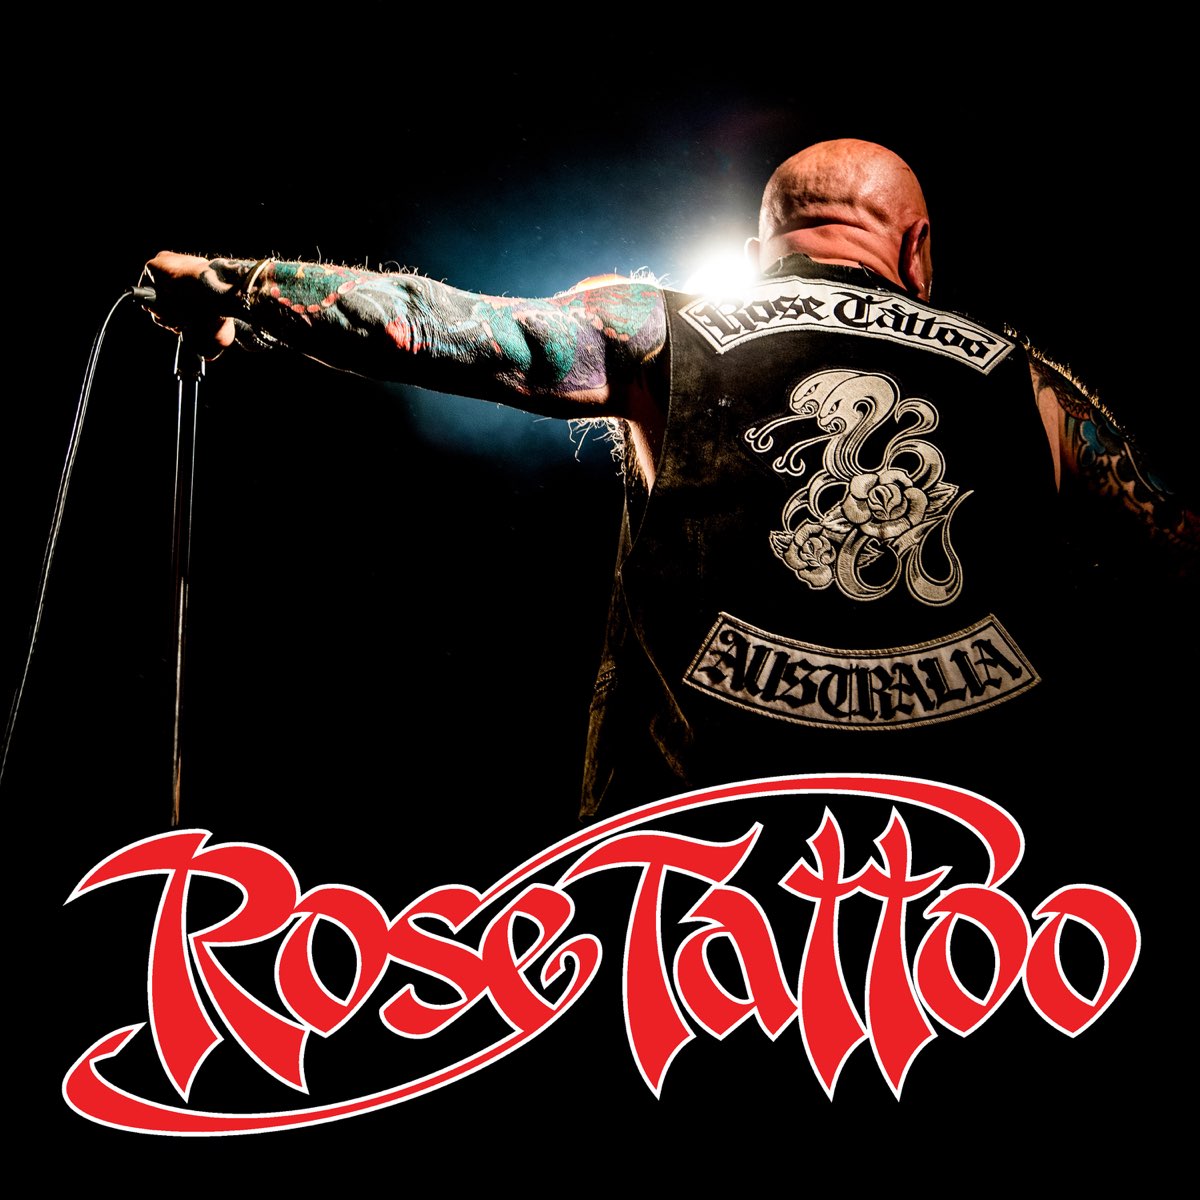 Rose Tattoo Butcher and fast Eddie